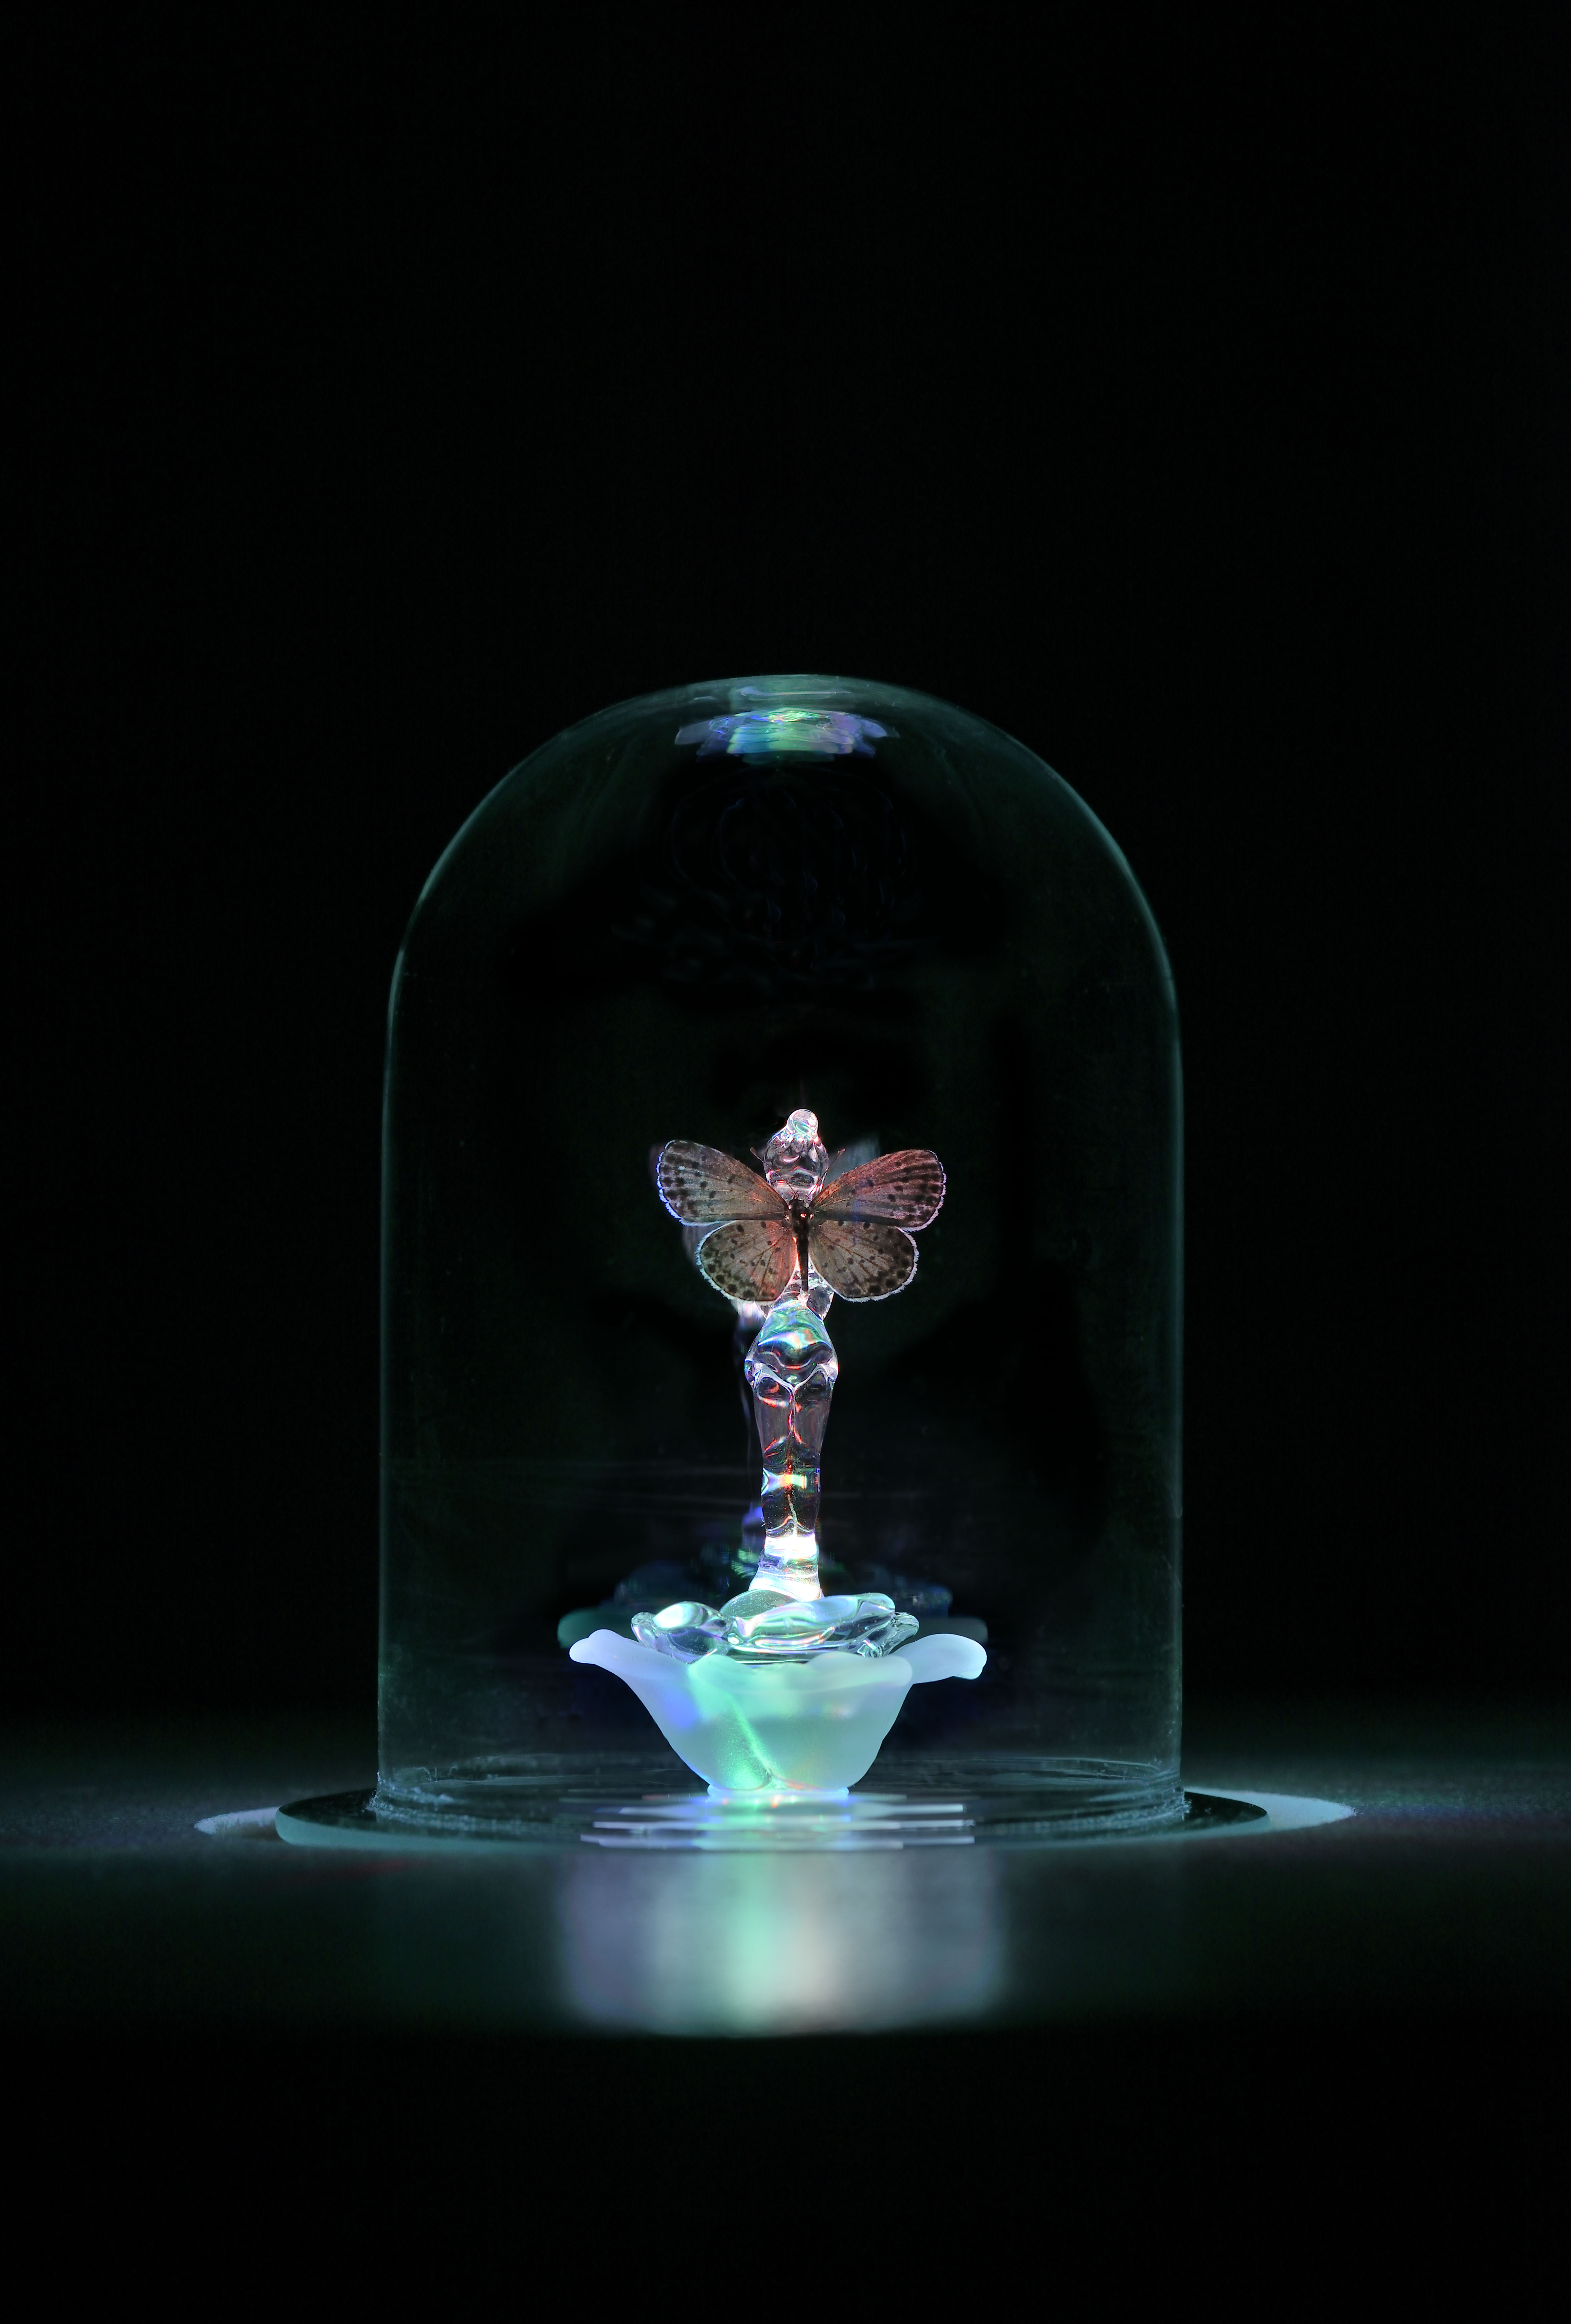 Ken + Julia YONETANI, Three Wishes 2014, glass figurine, butterfly specimen, glass dome, music box. Photo by Catherine Brossais. ©︎ Ken + Julia Yonetani. Courtesy of Mizuma Art Gallery.